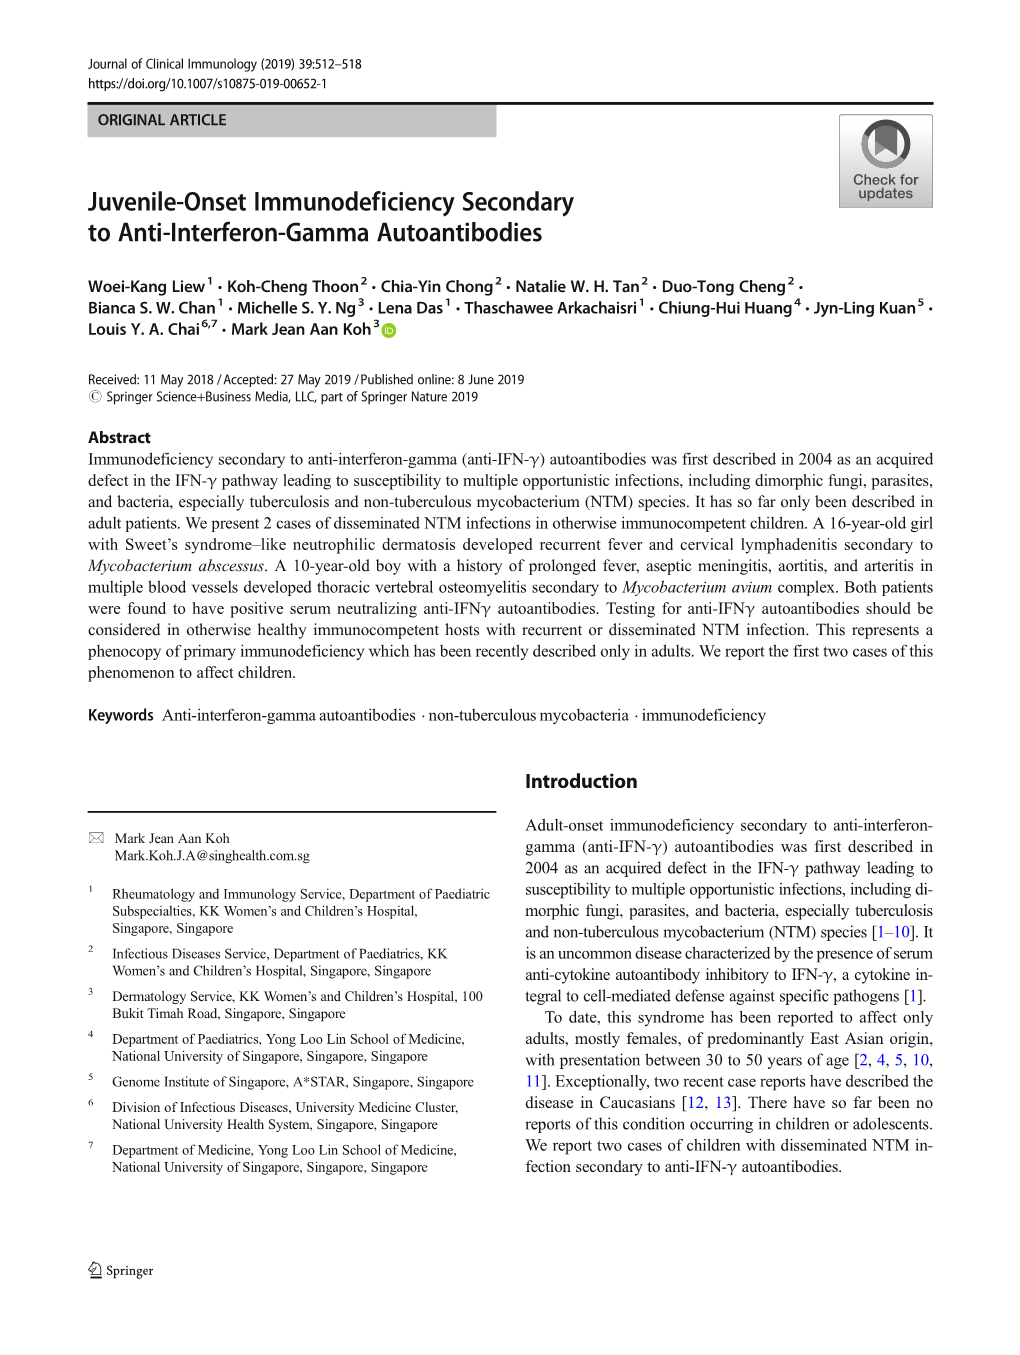 Juvenile-Onset Immunodeficiency Secondary to Anti-Interferon-Gamma Autoantibodies